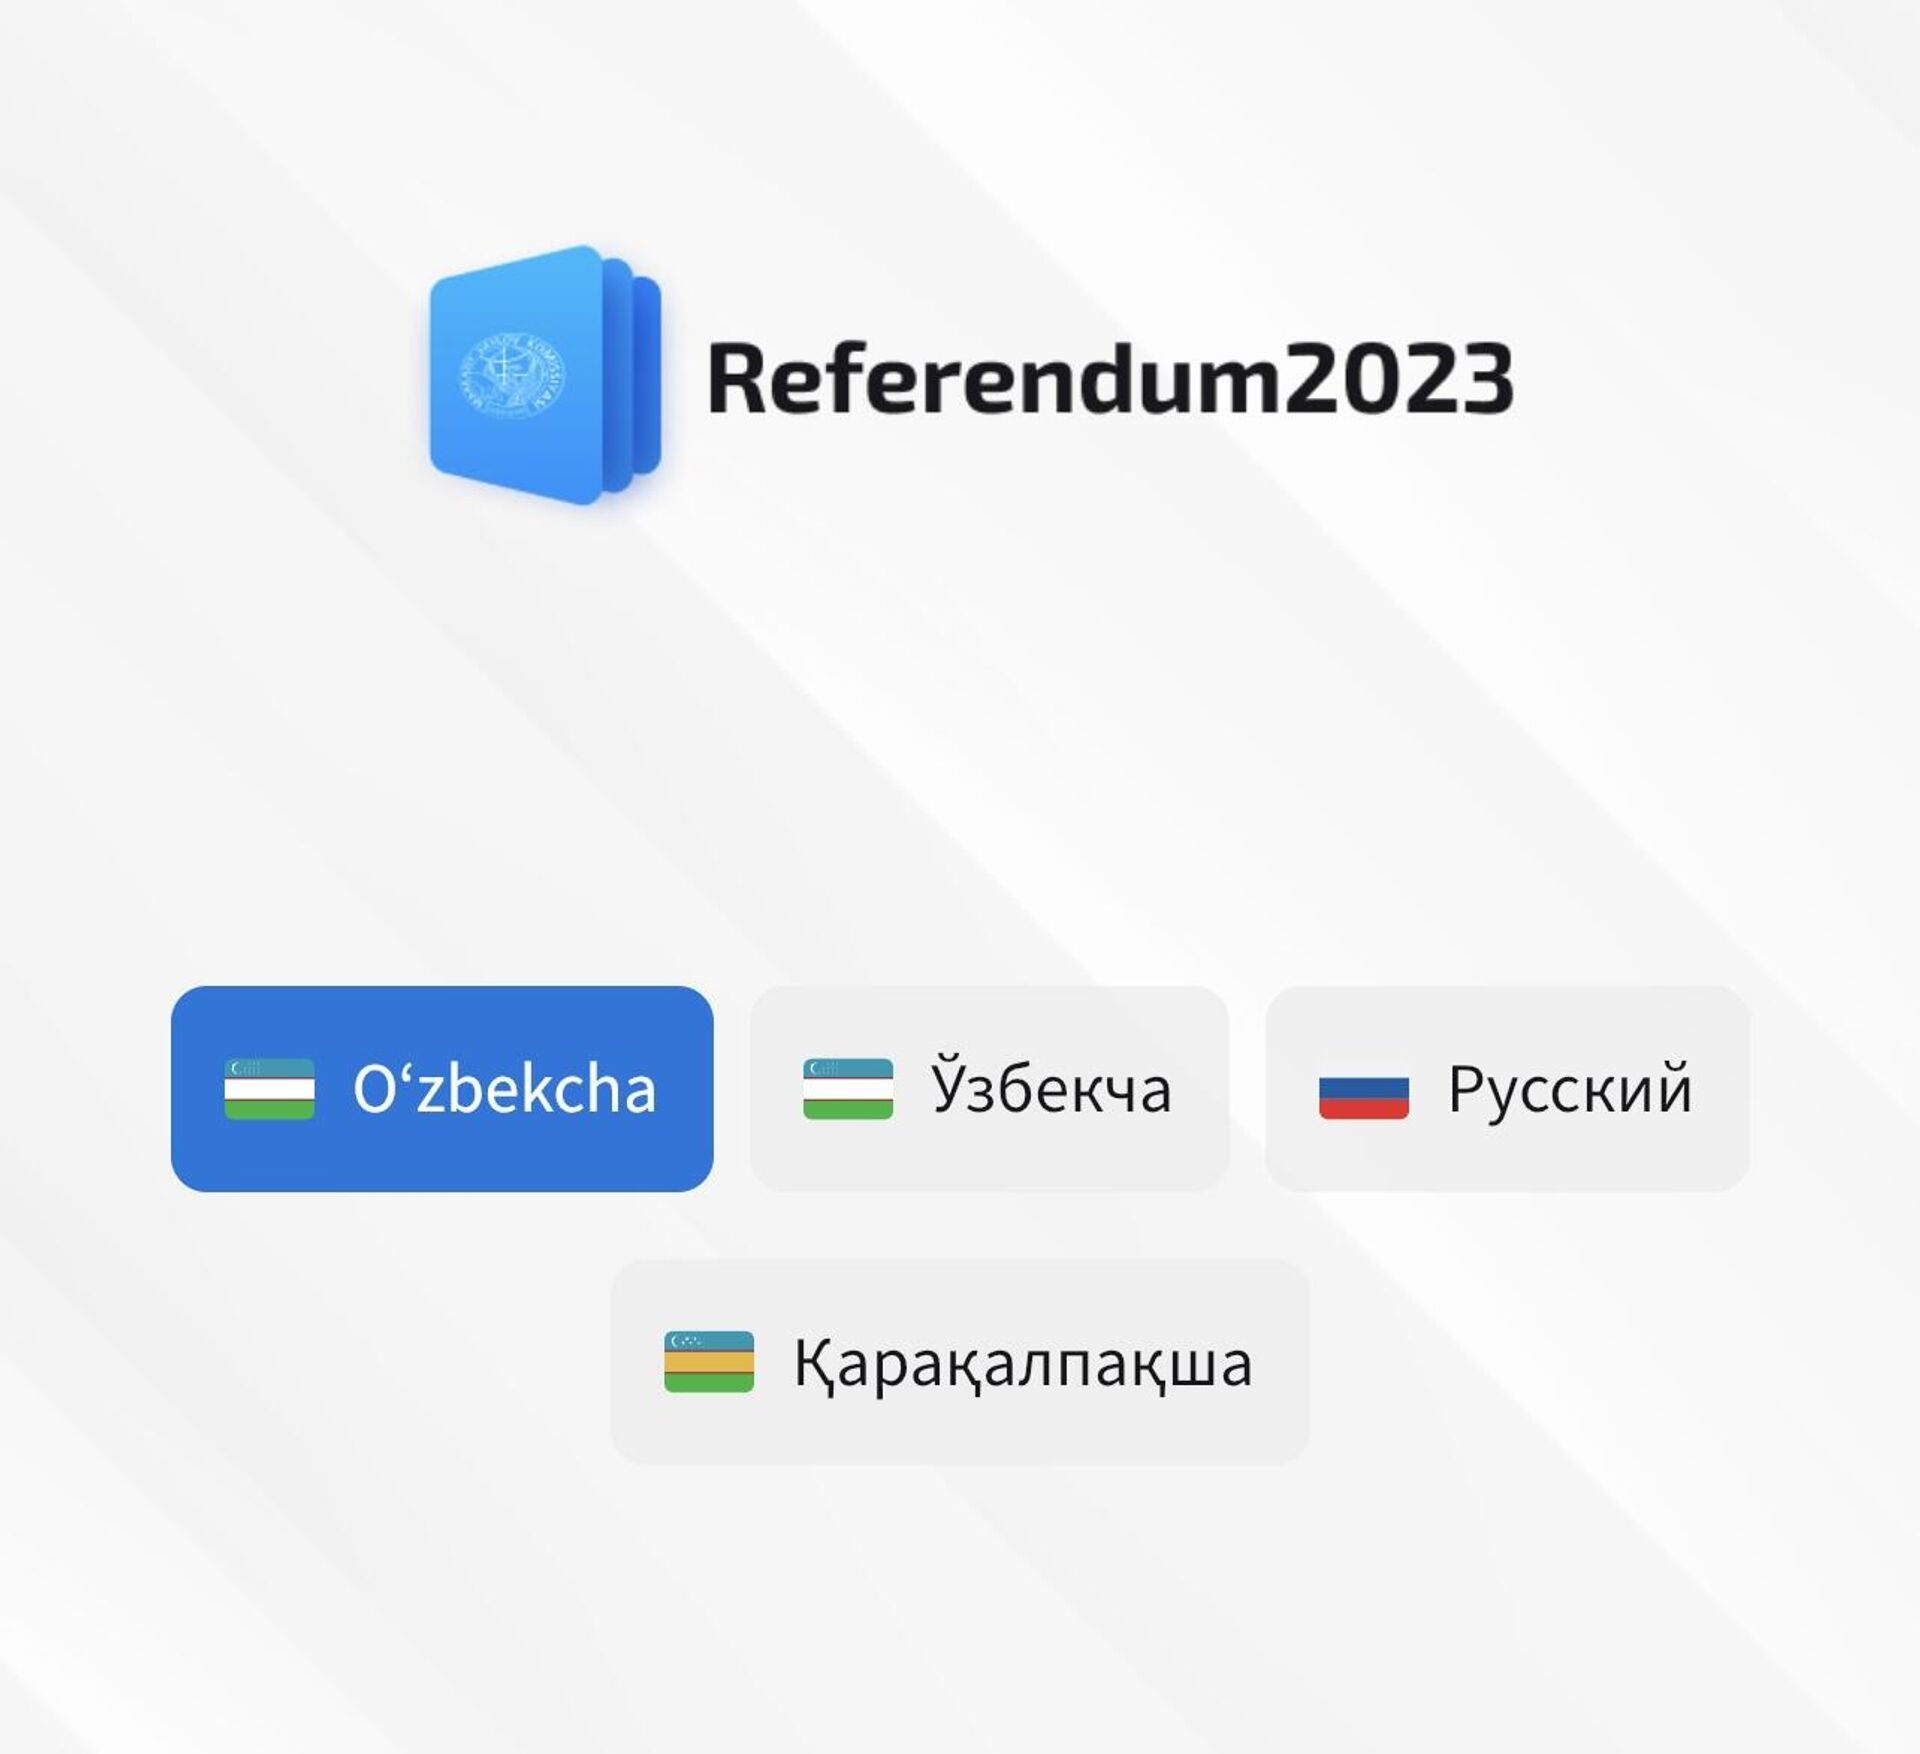 Referendum 2023 mobil ilovasi  - Sputnik O‘zbekiston, 1920, 01.04.2023